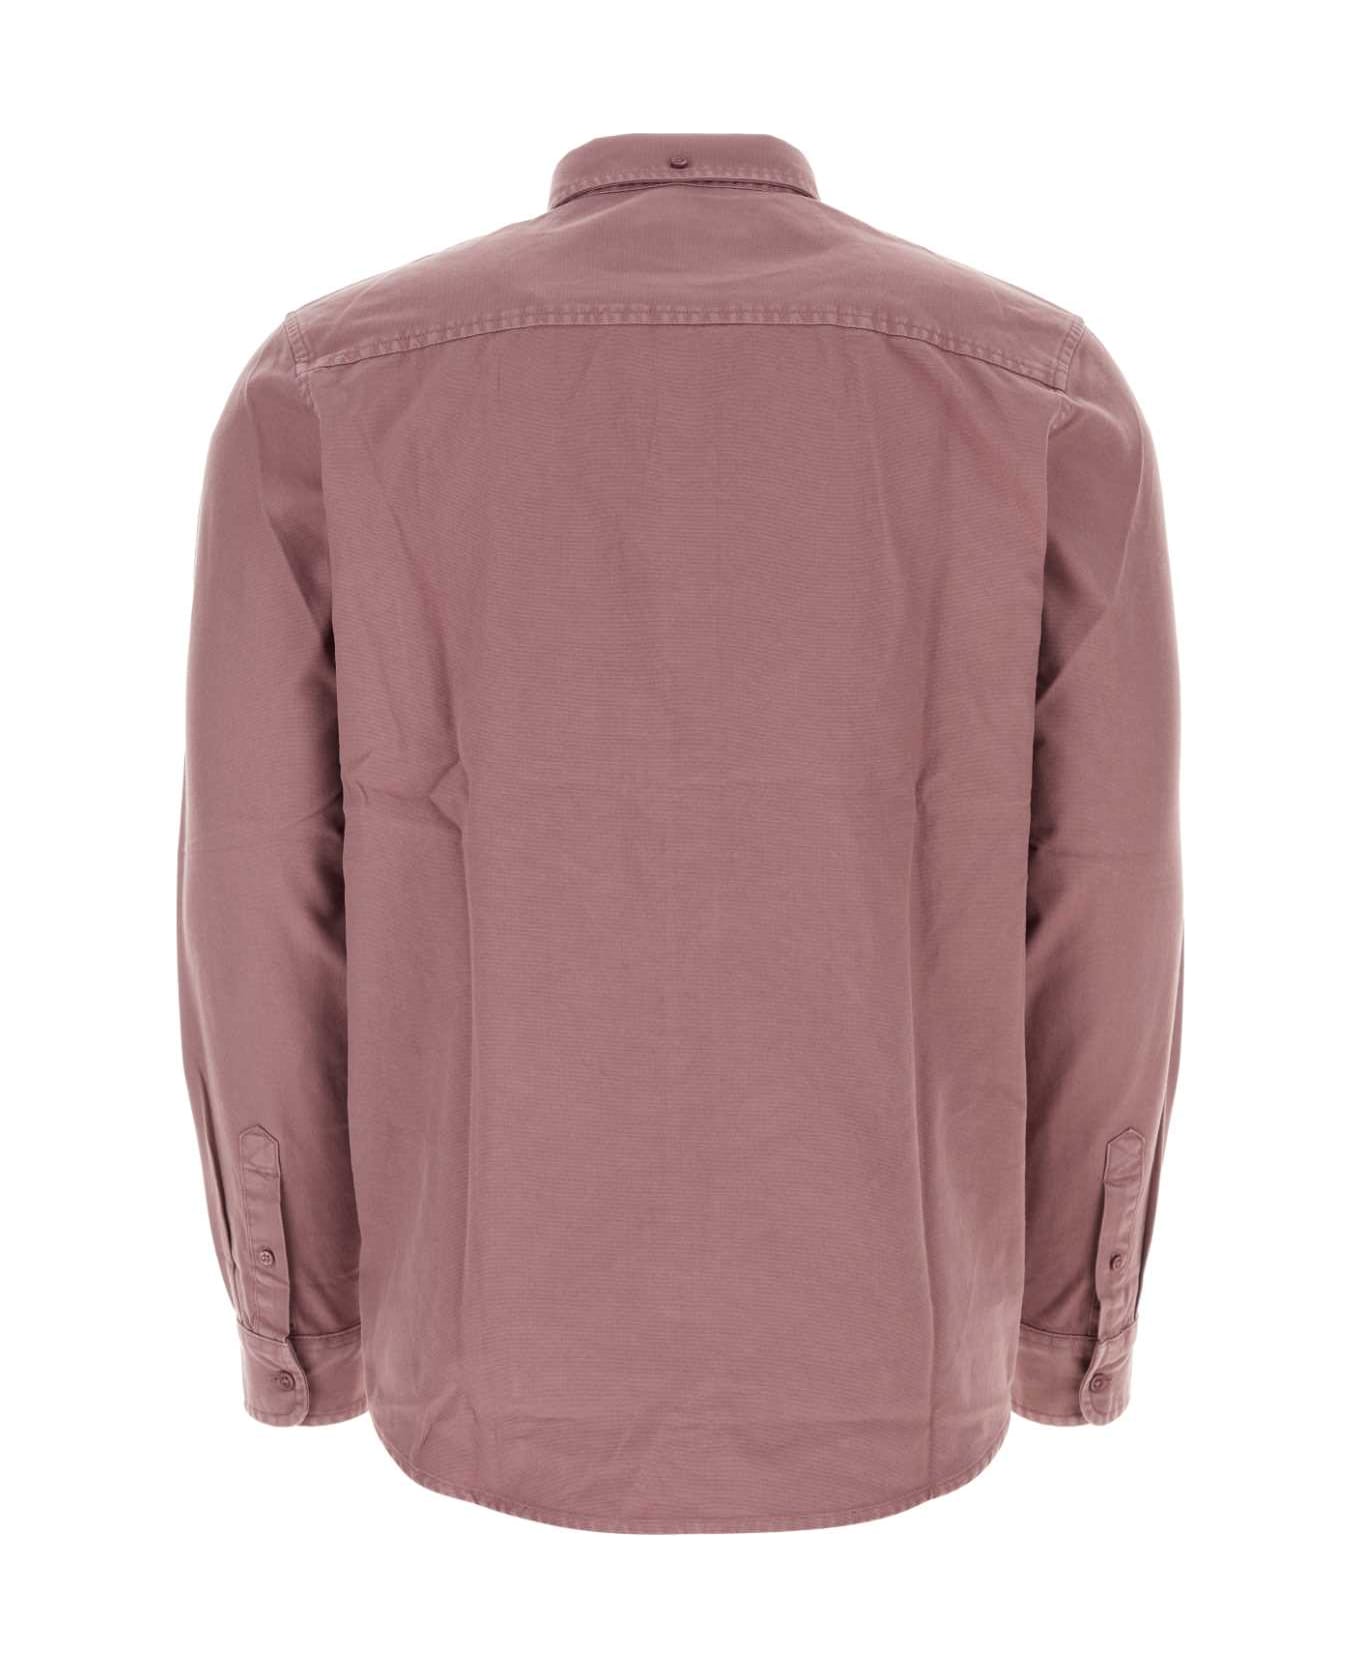 Carhartt Antiqued Pink Cotton L/s Bolton Shirt - DAFNE シャツ